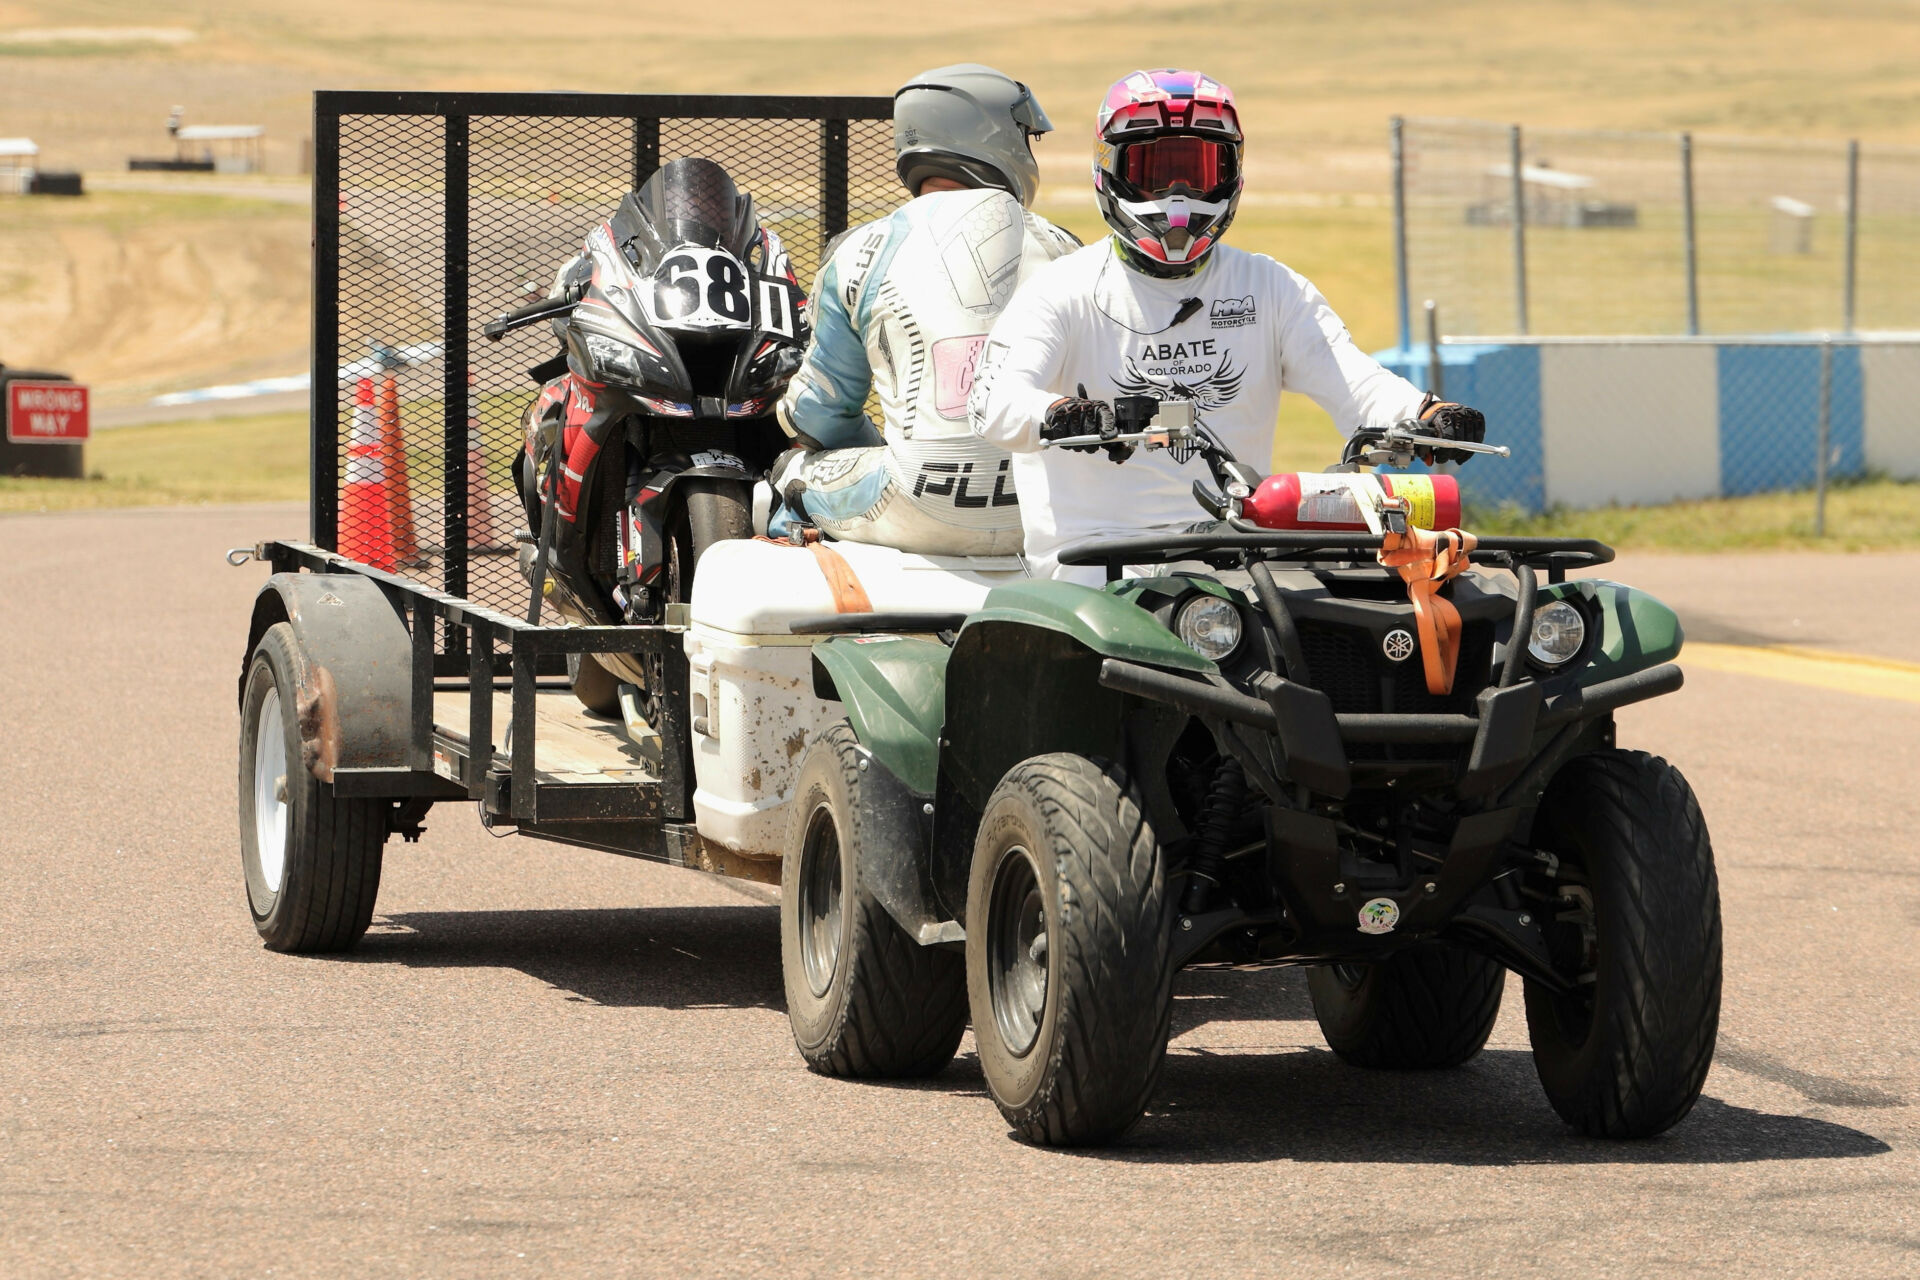 MRA crash cart and equipment supervisor Dakota Bell at work during an MRA event at High Plains Raceway. Photo courtesy MRA.